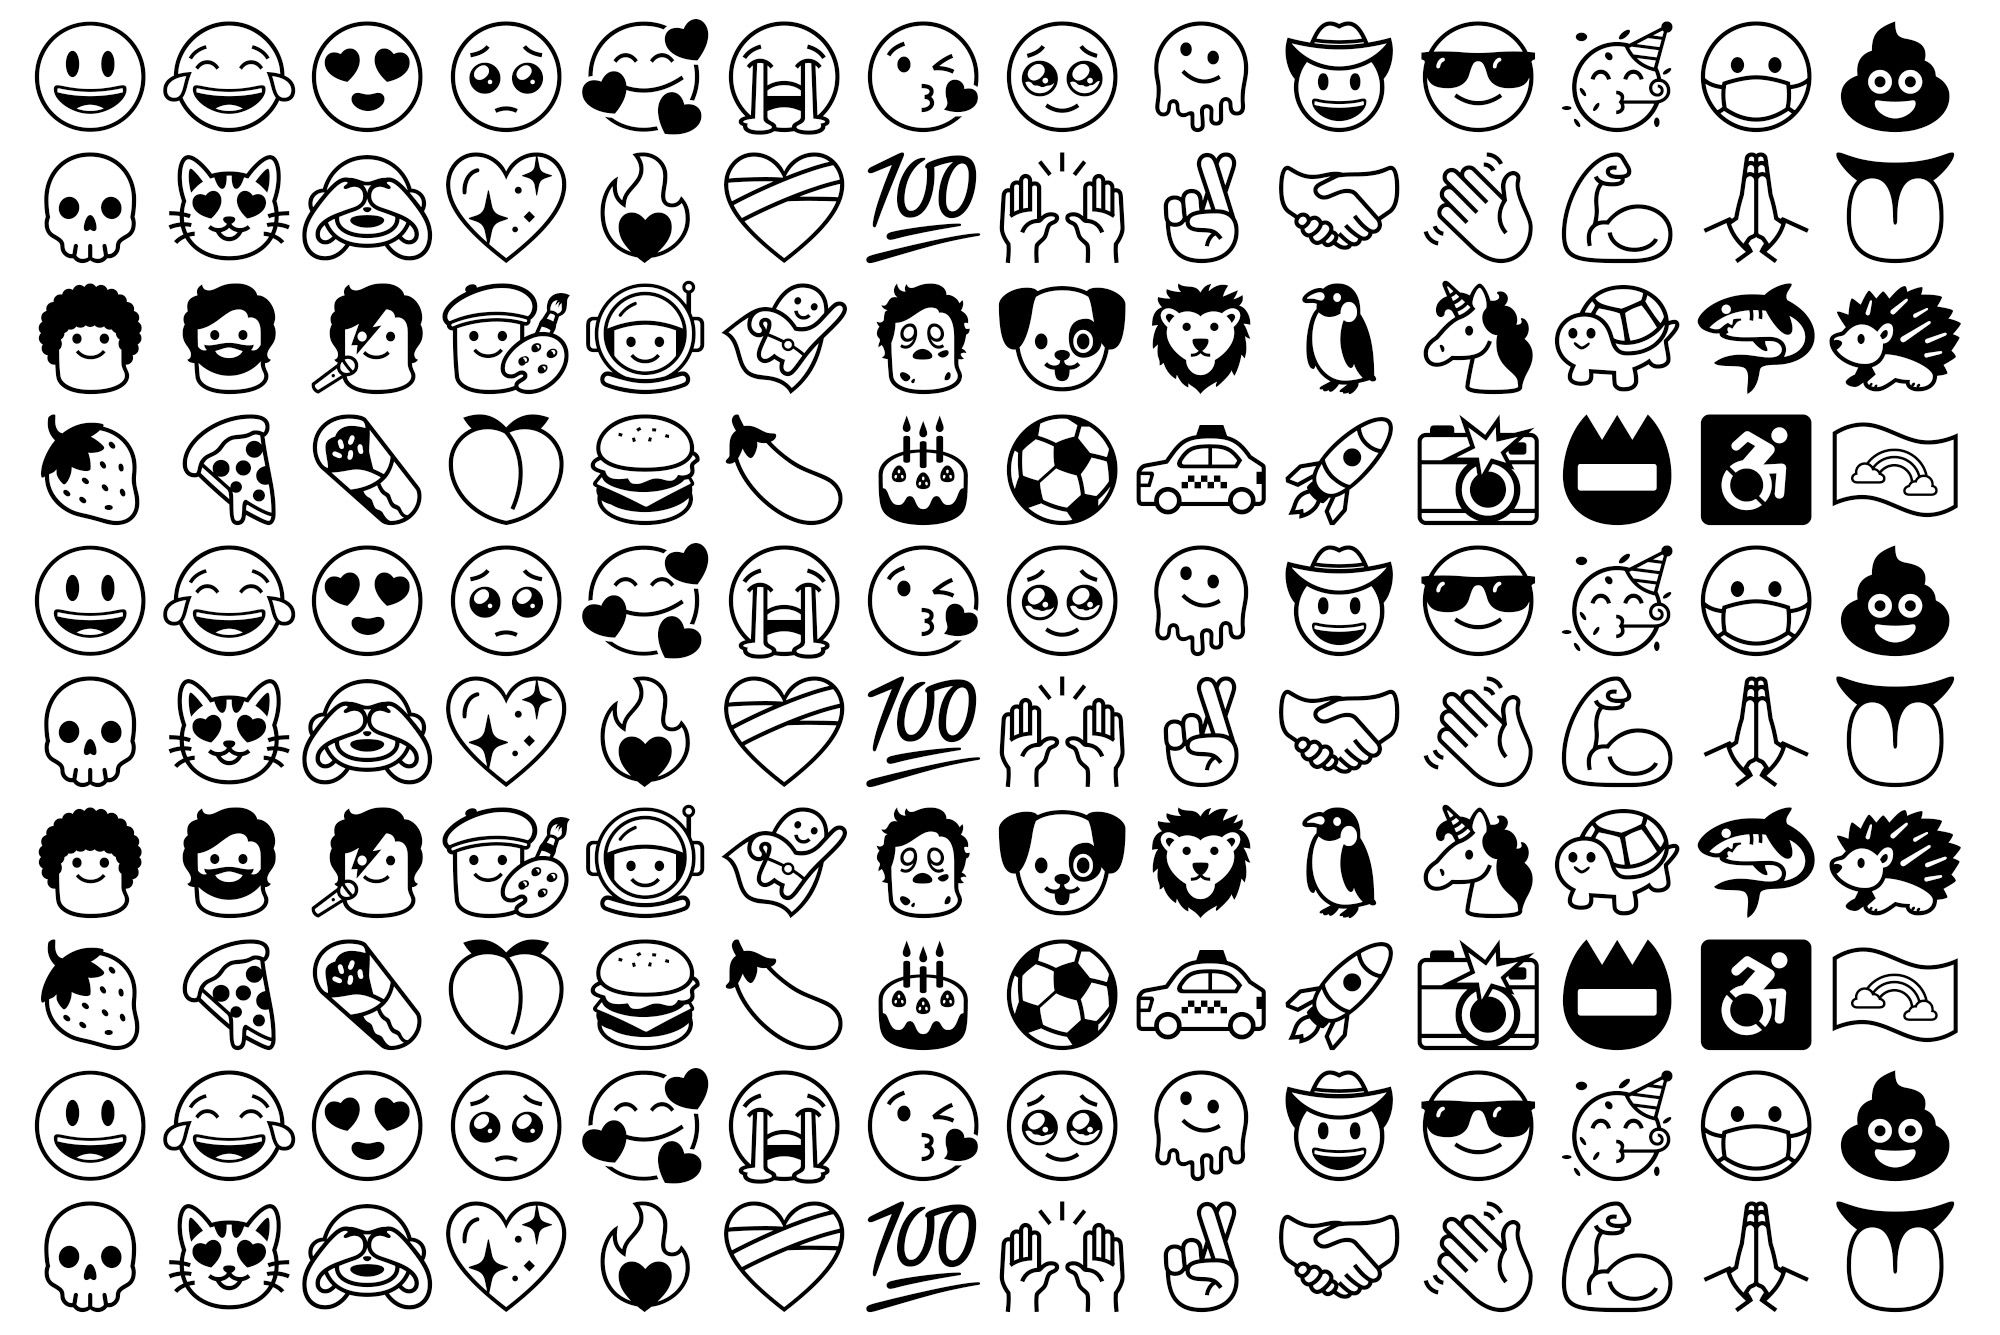 Exploring Google's New Black-and-Blobby Emoji Font